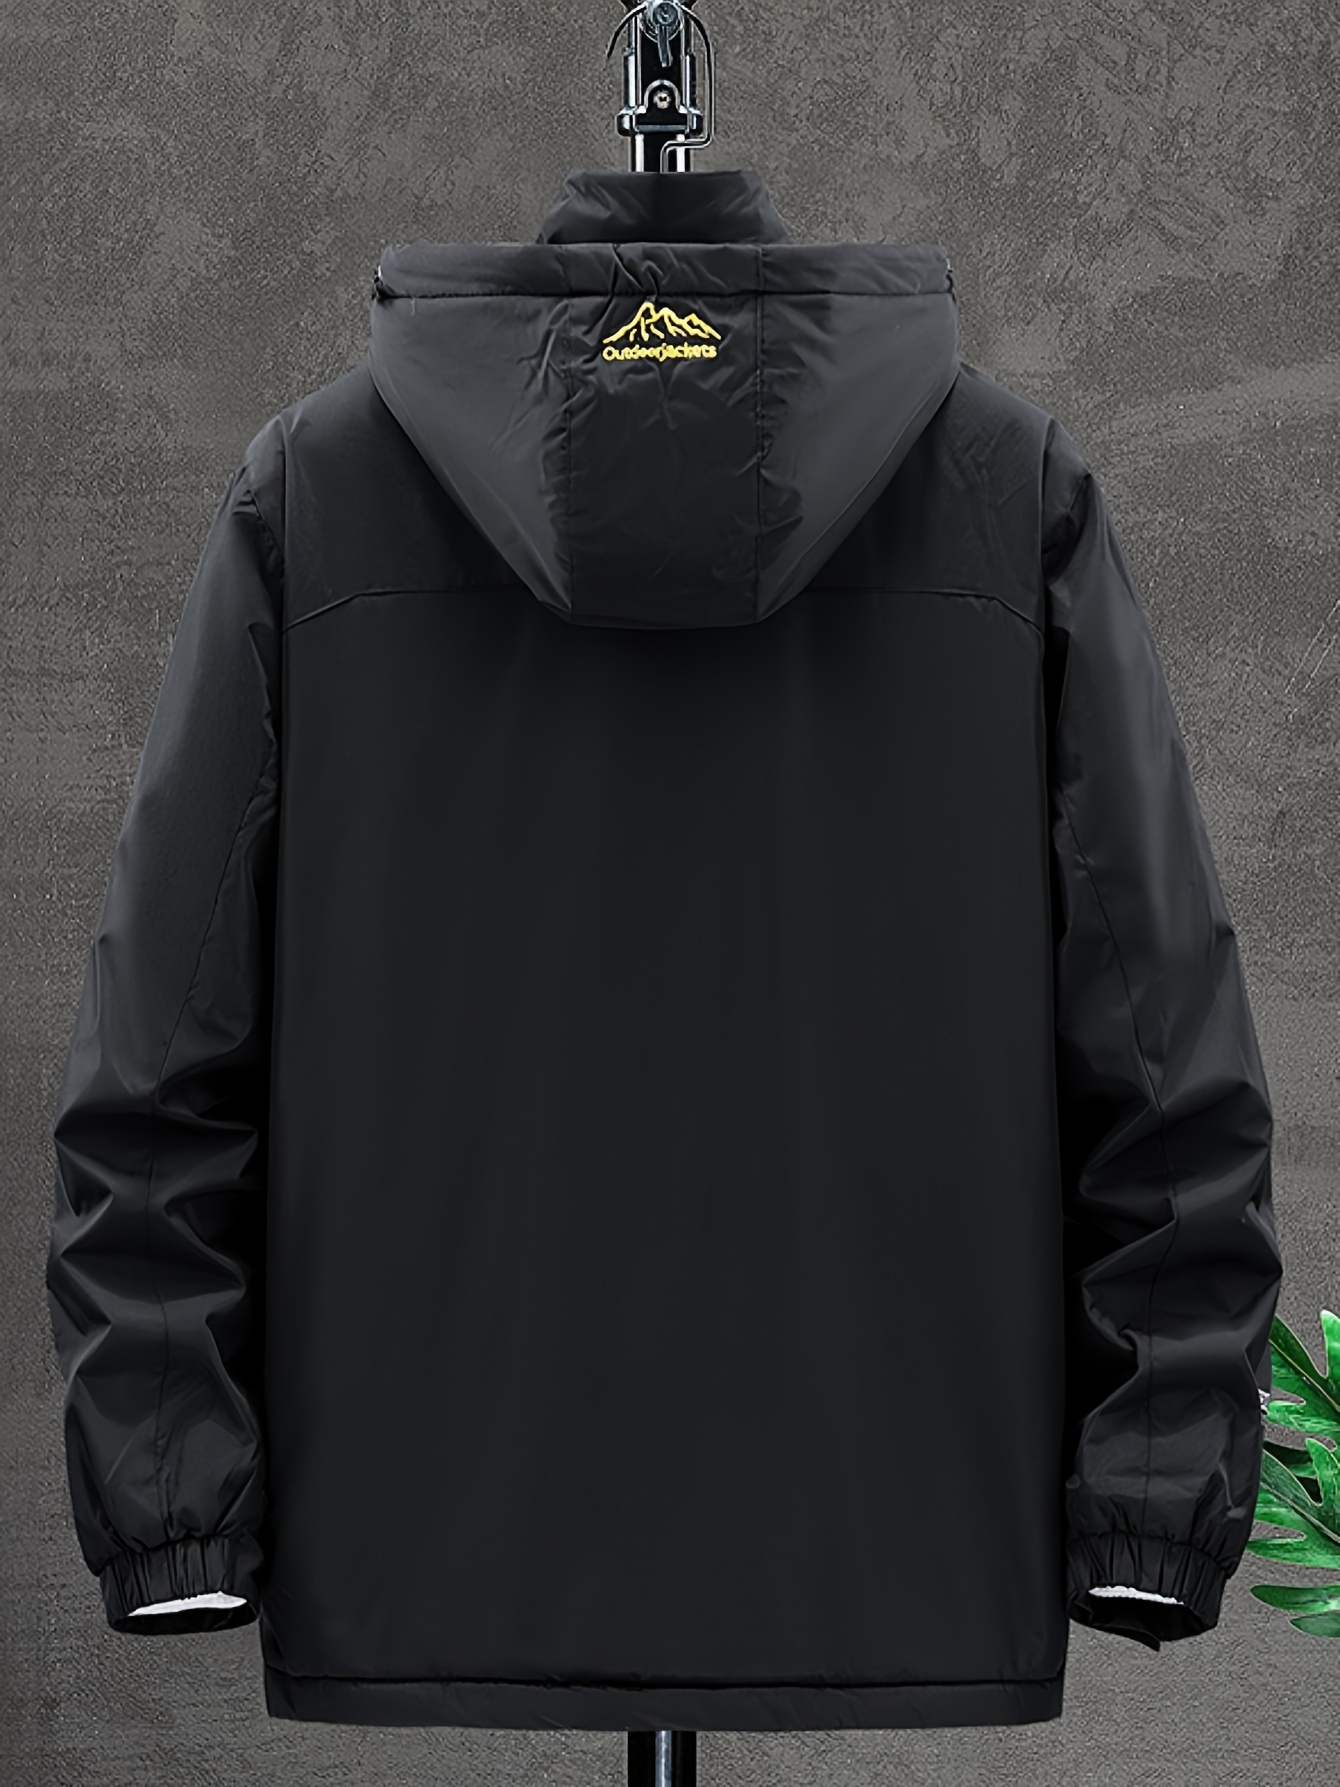 mens waterproof rain jacket lightweight raincoat windbreaker with hood for hiking travel outdoor details 6